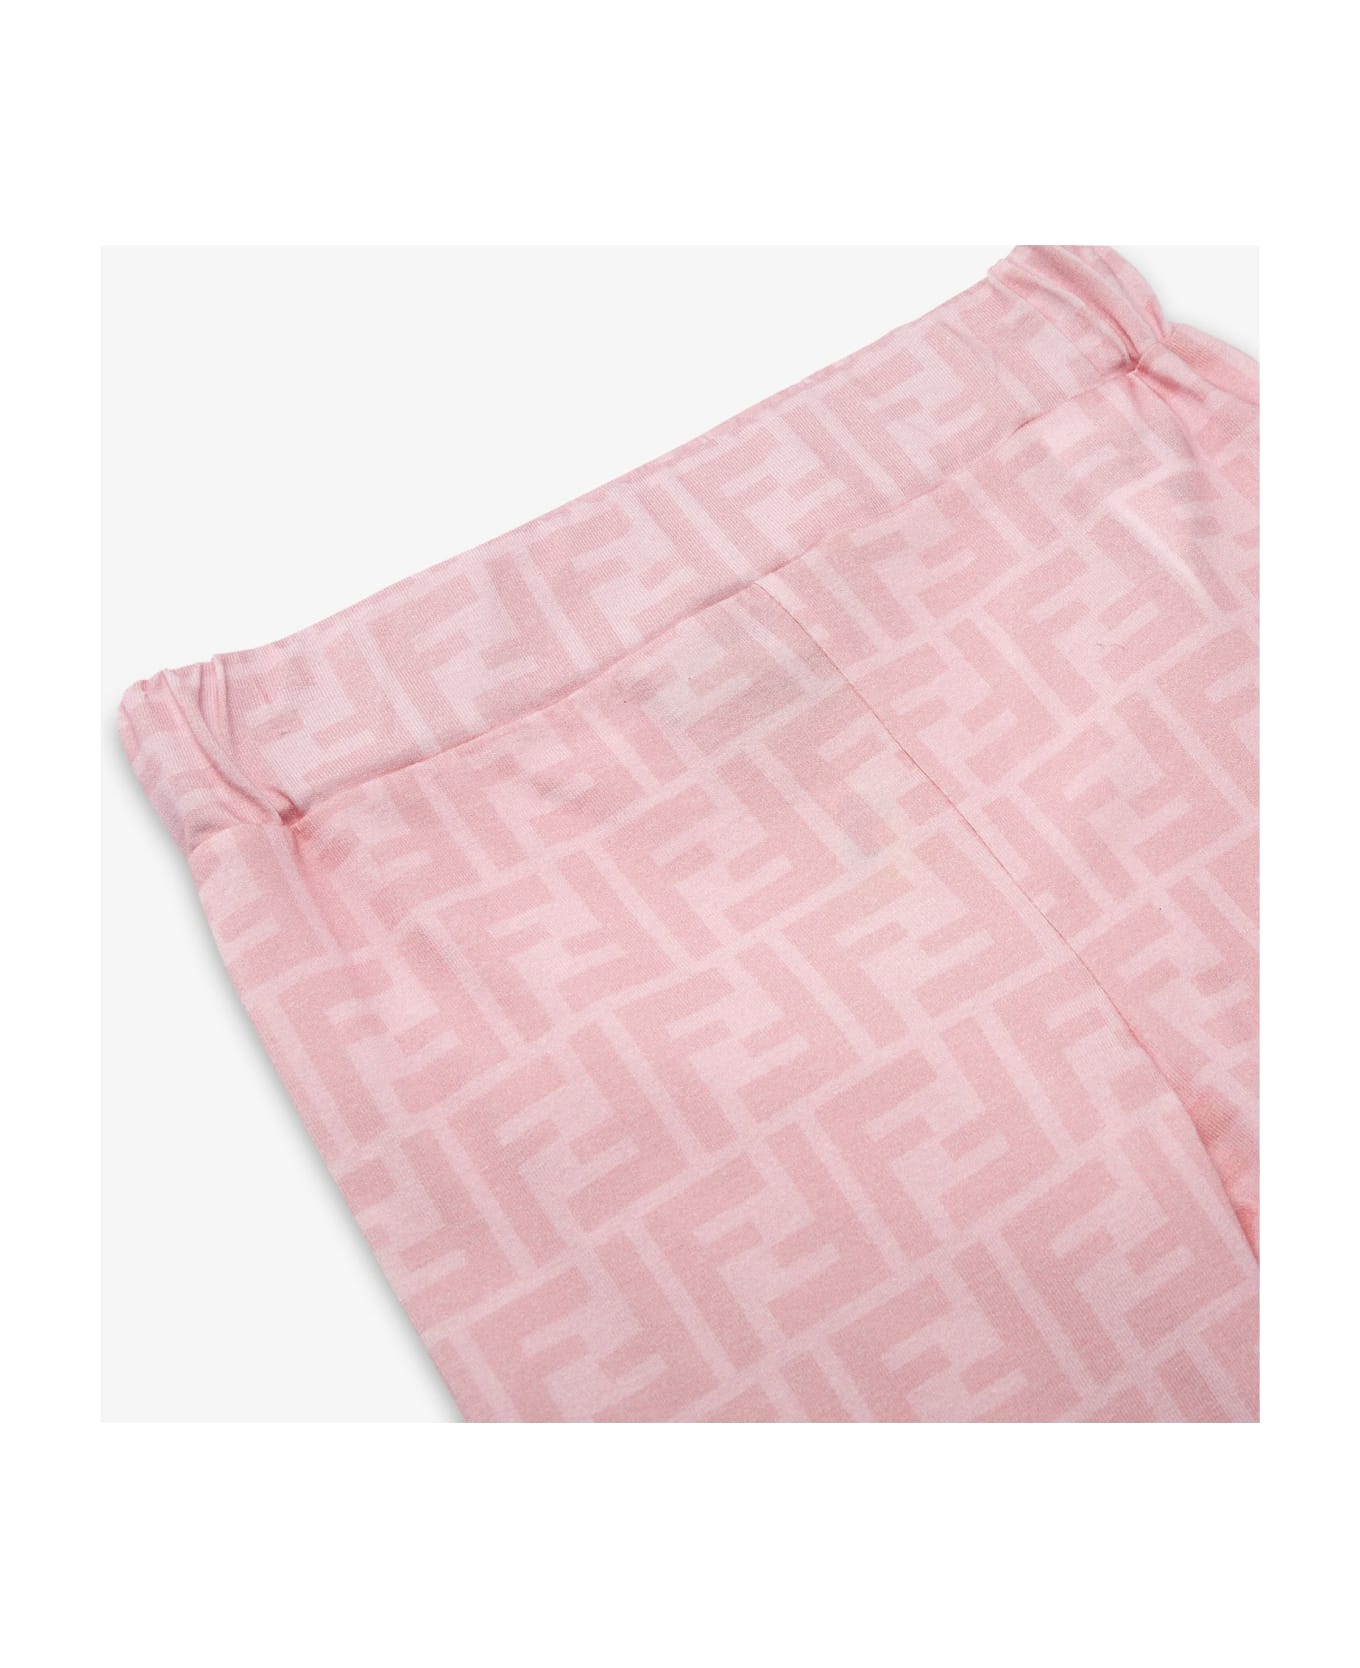 Fendi Kids Trousers Pink - Pink